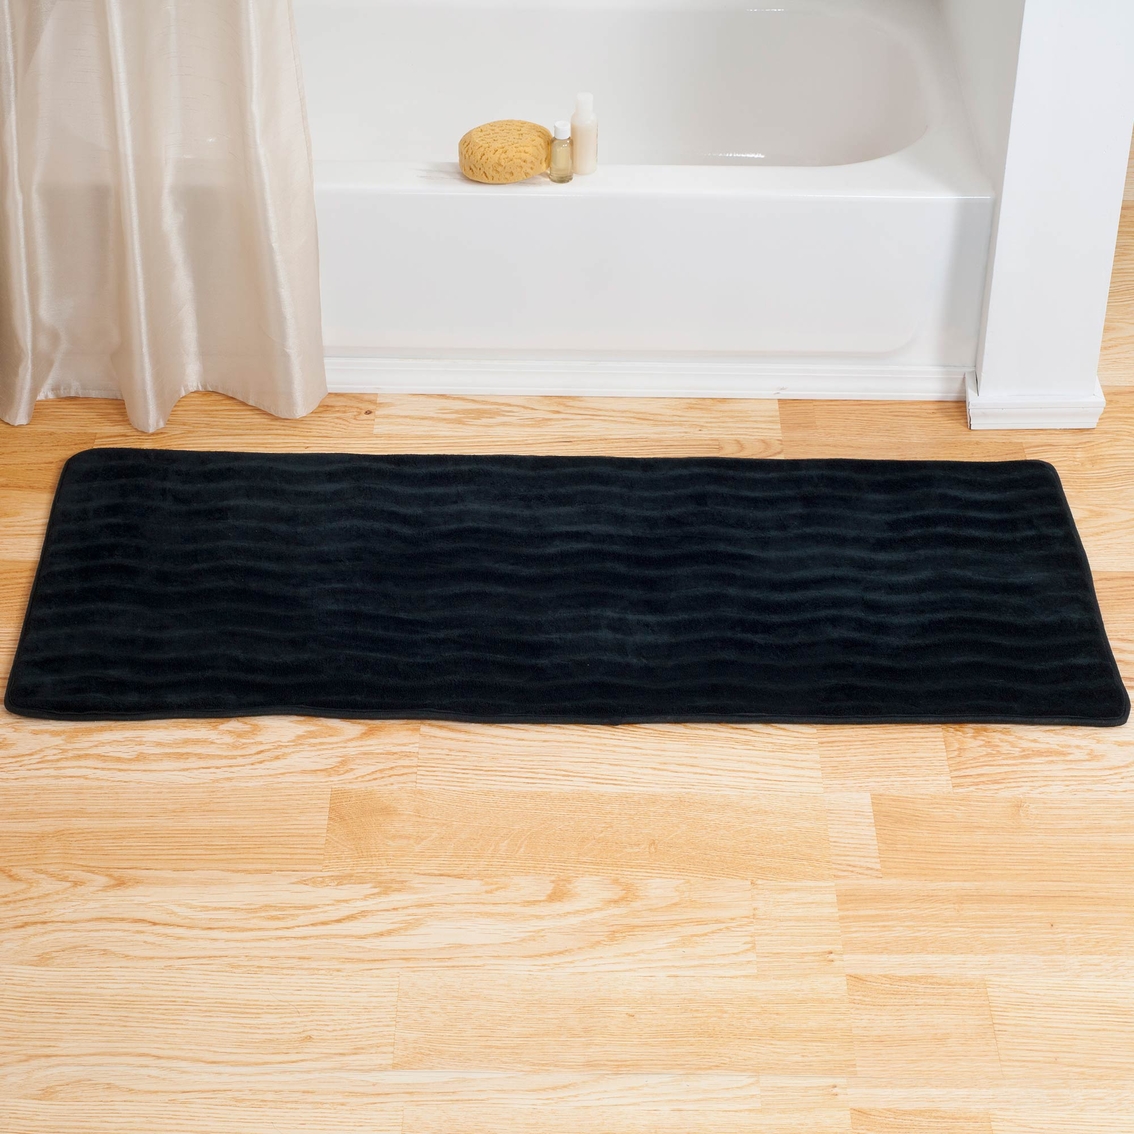 Lavish Home Extra Long Bath Rug Mat - Image 3 of 3